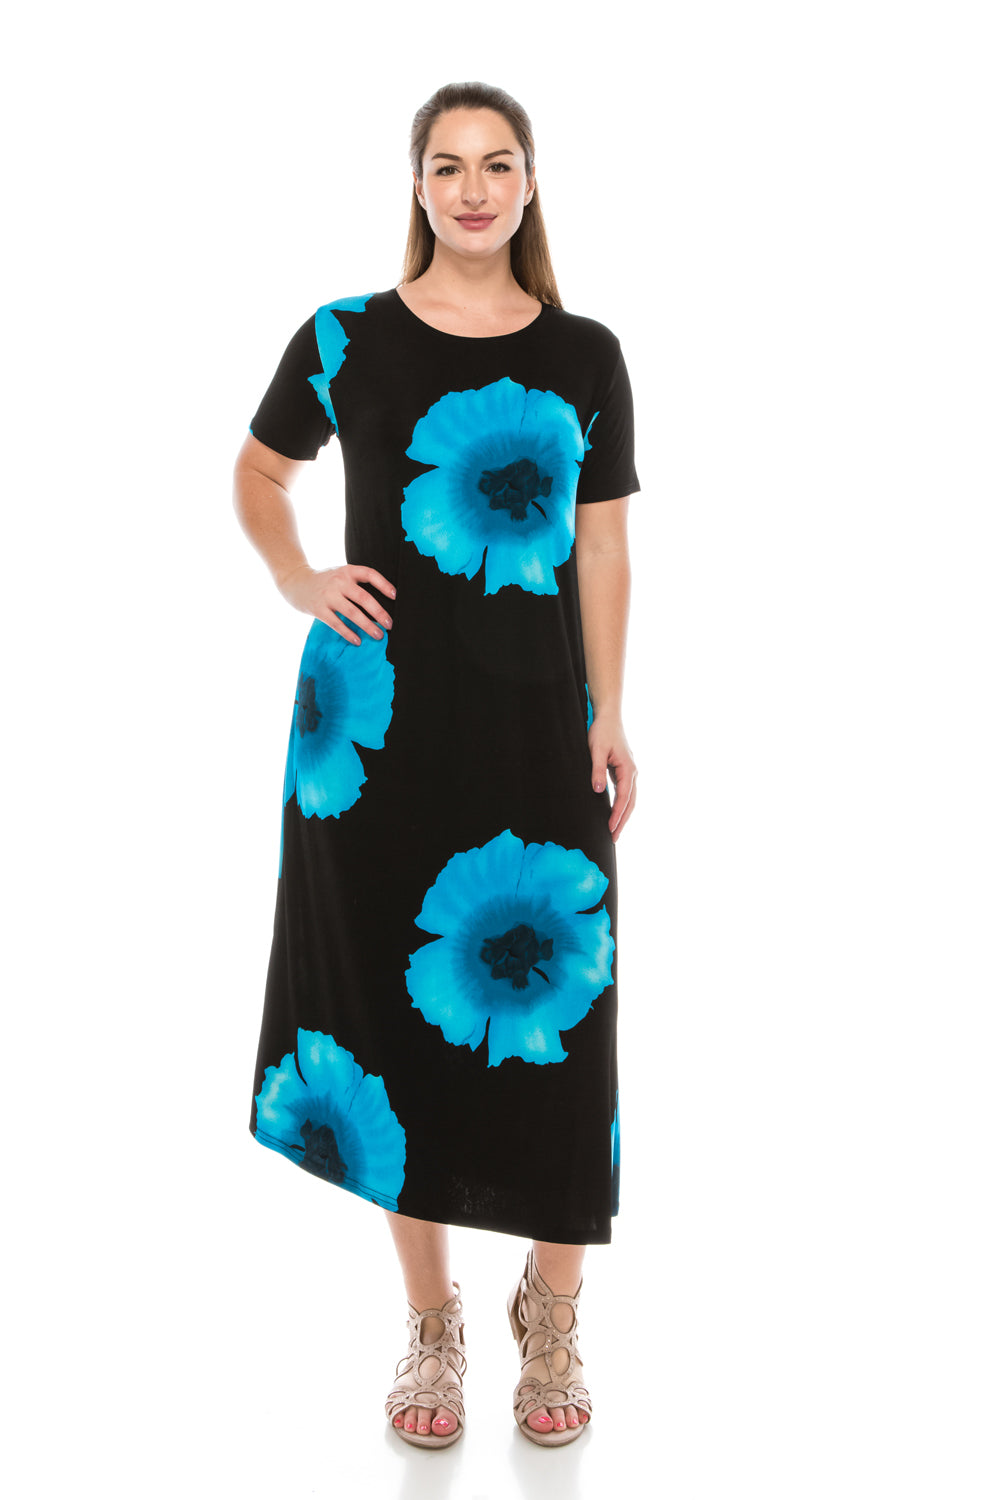 Jostar Women's Stretchy Long Dress Short Sleeve Print, 702BN-SP-W113 - Jostar Online